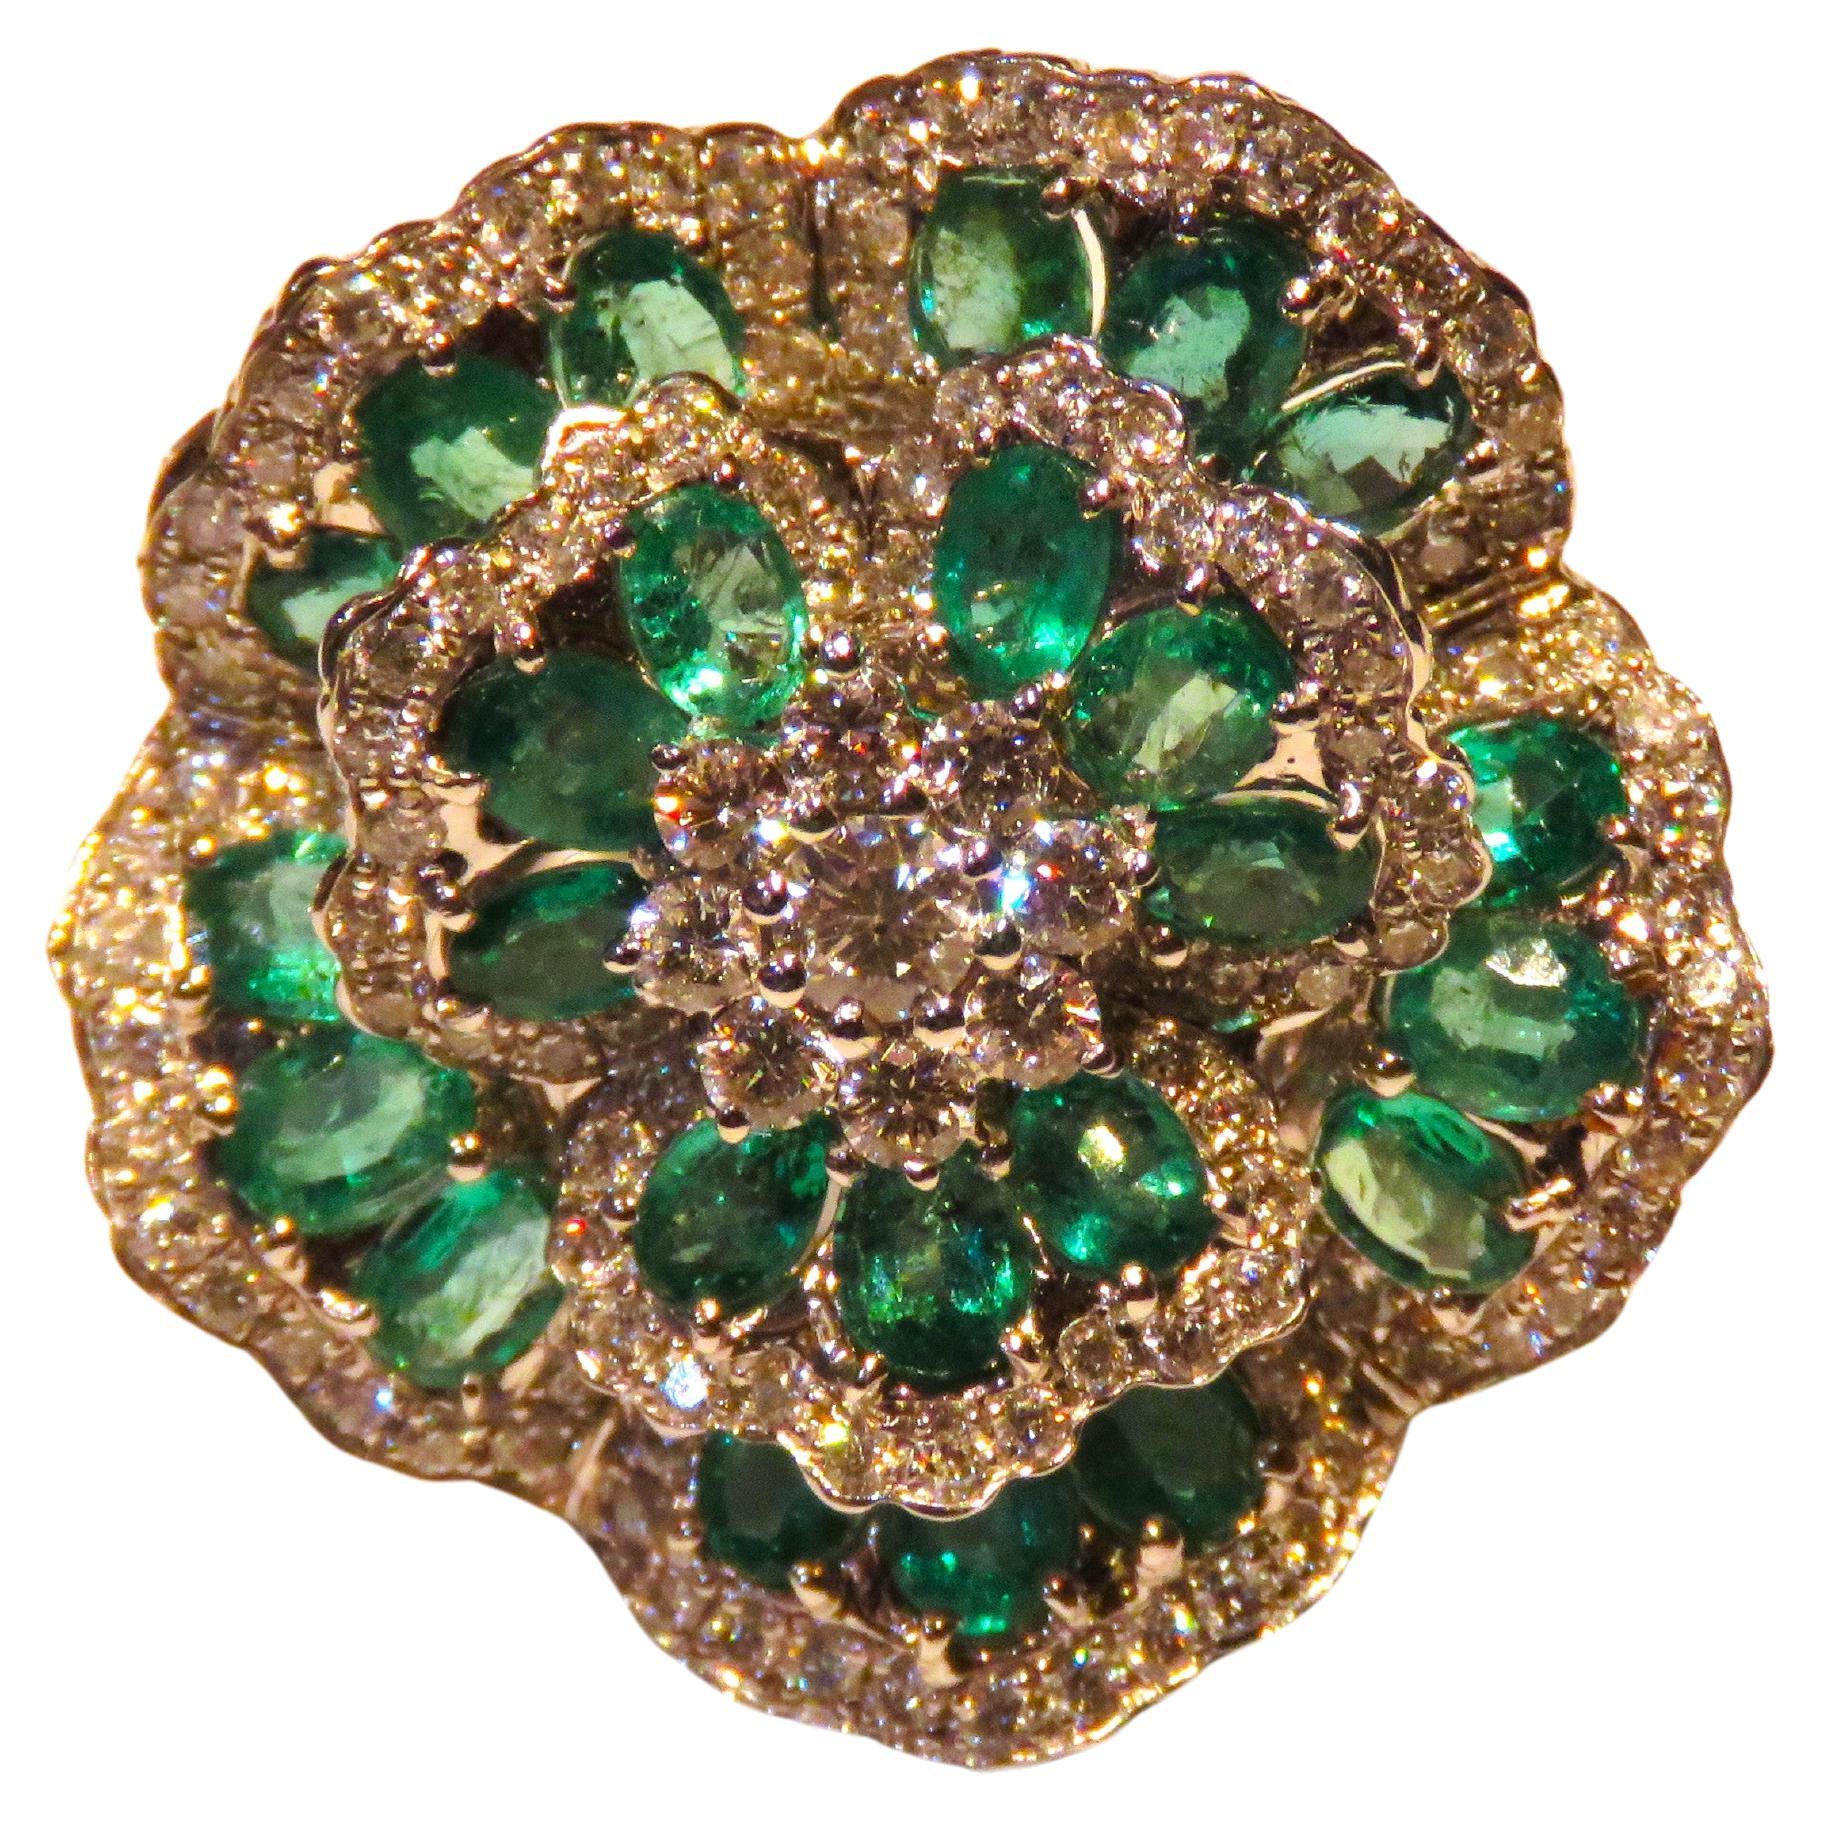 NEU $19, 800 Rare 18KT Gold Wunderschöner Fancy Großer Blumen-Smaragd-Diamant-Ring, Großer Fancy